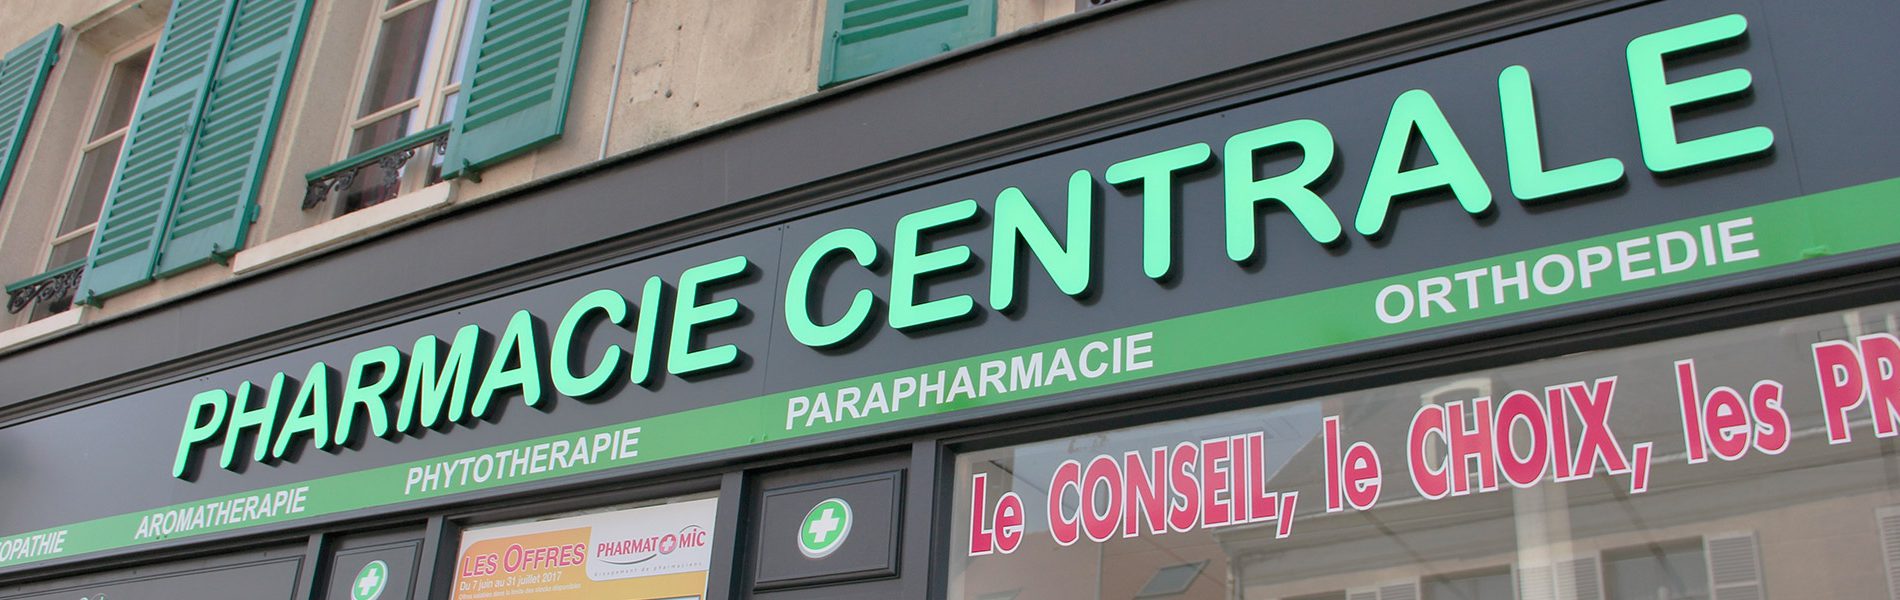 Pharmacie CENTRALE - Image Homepage 3